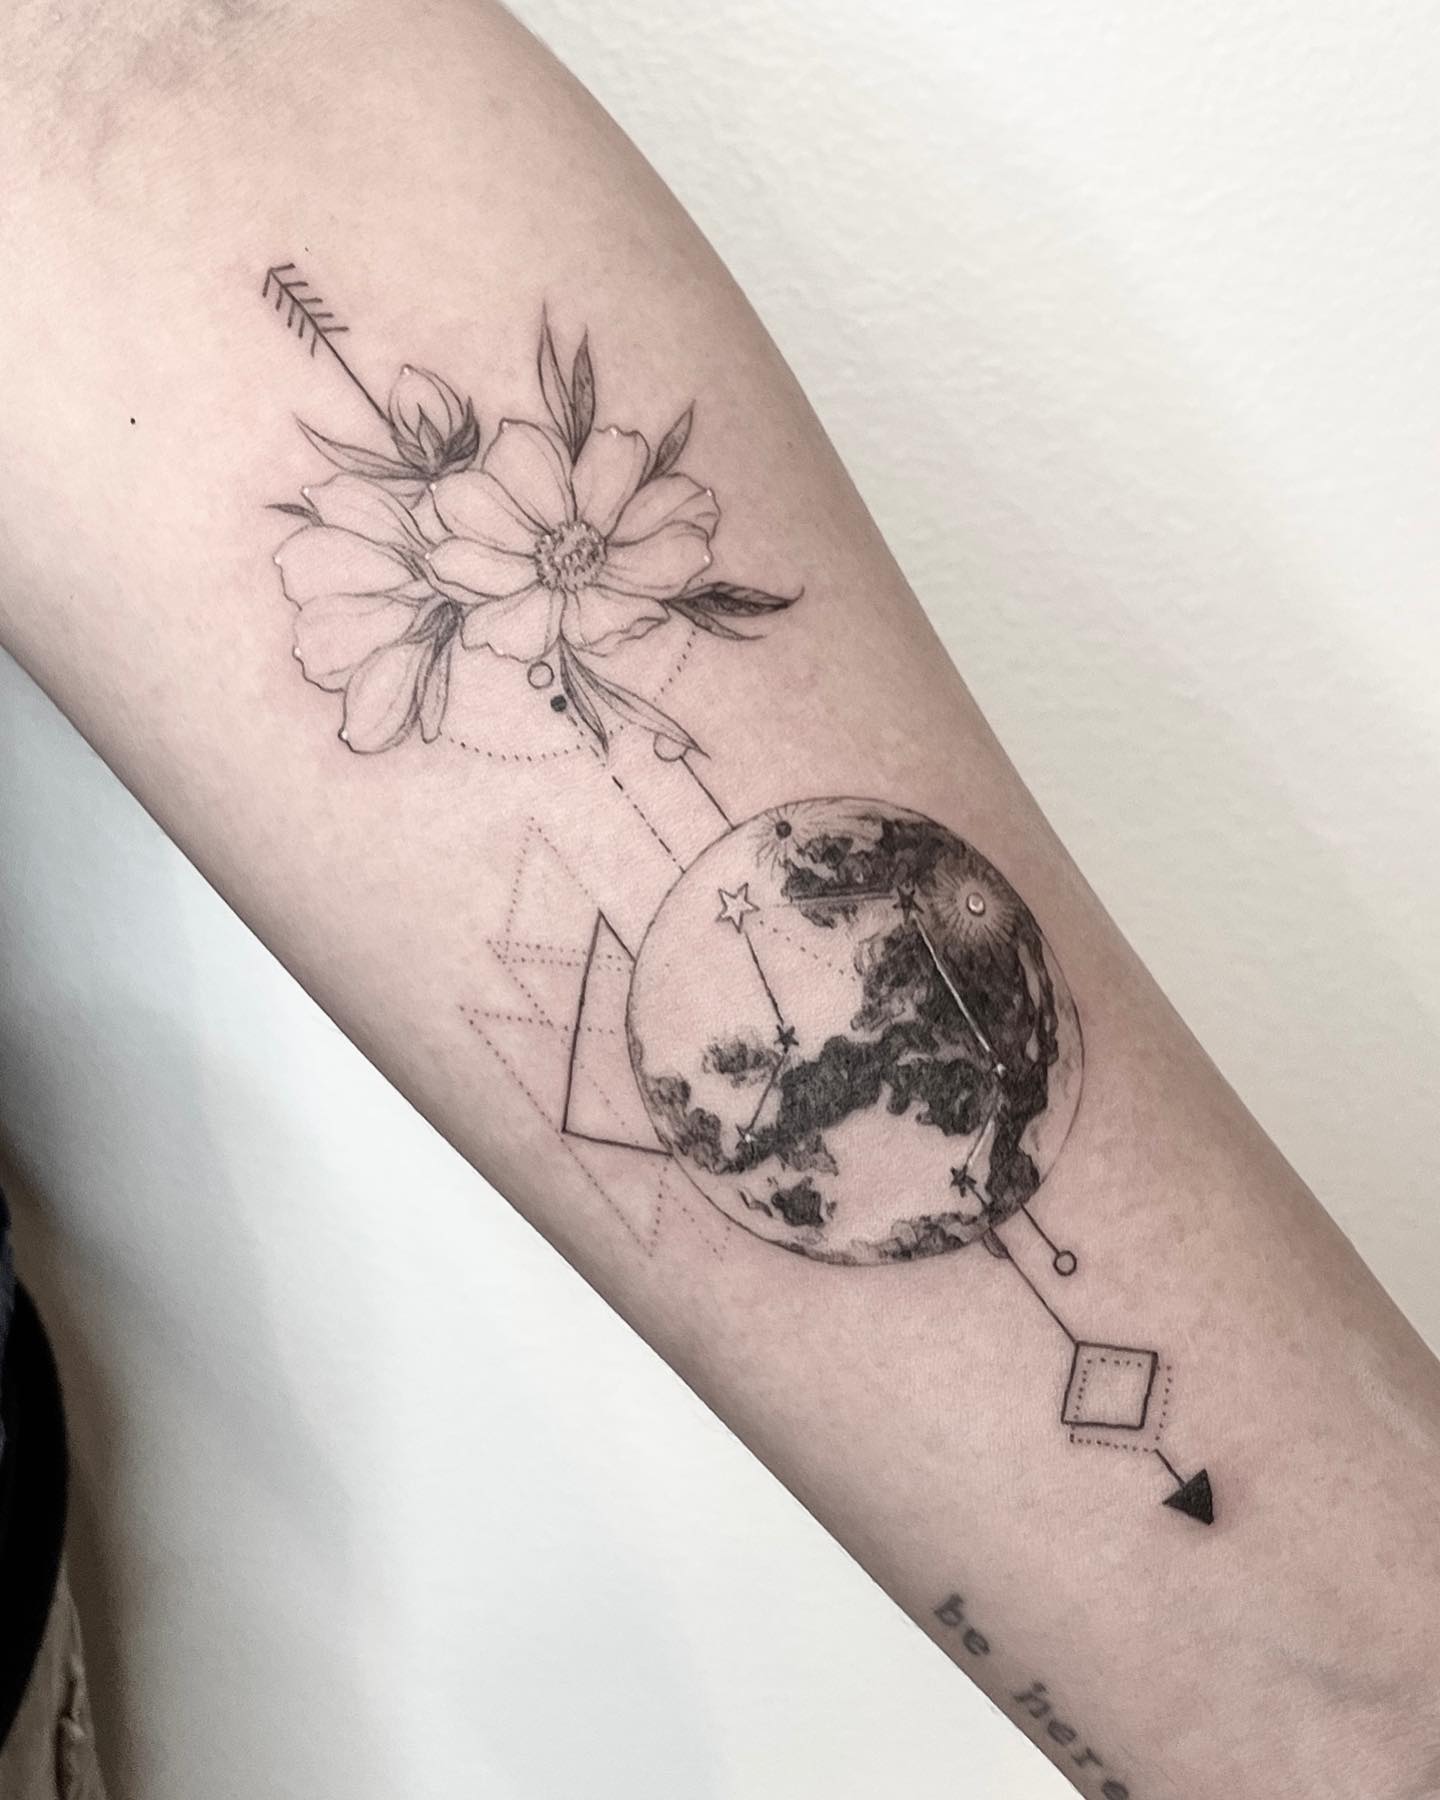 Elegant Floral and Geometric Earth Tattoo on Forearm